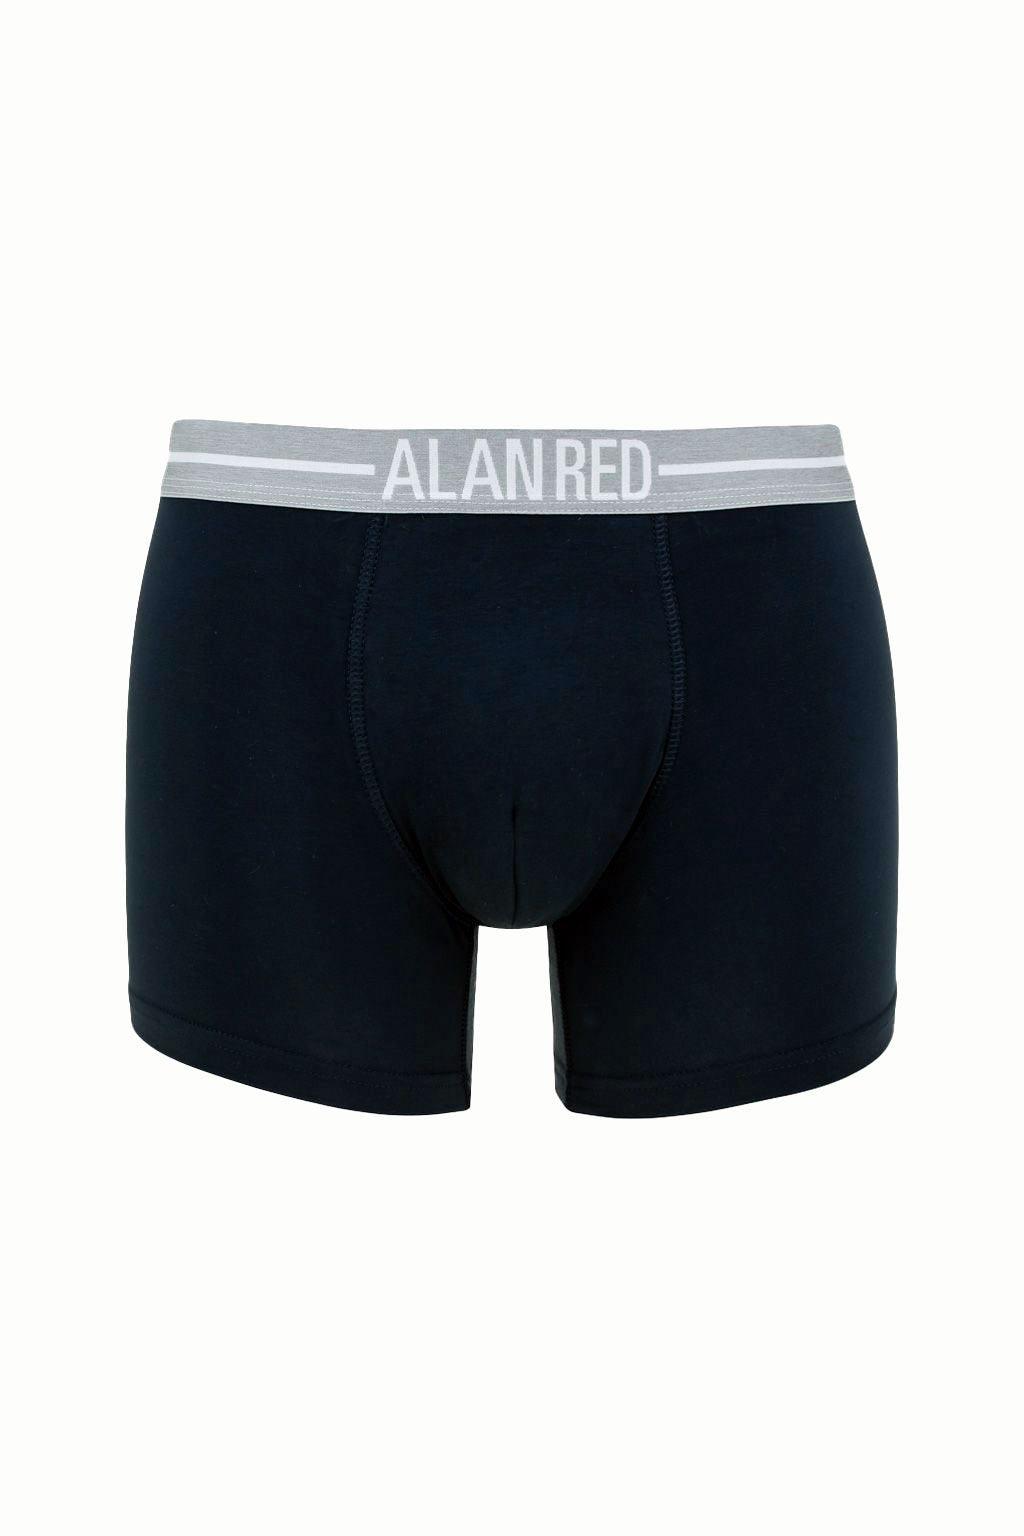 Alan Red underwear |  Big Boss | the menswear concept.